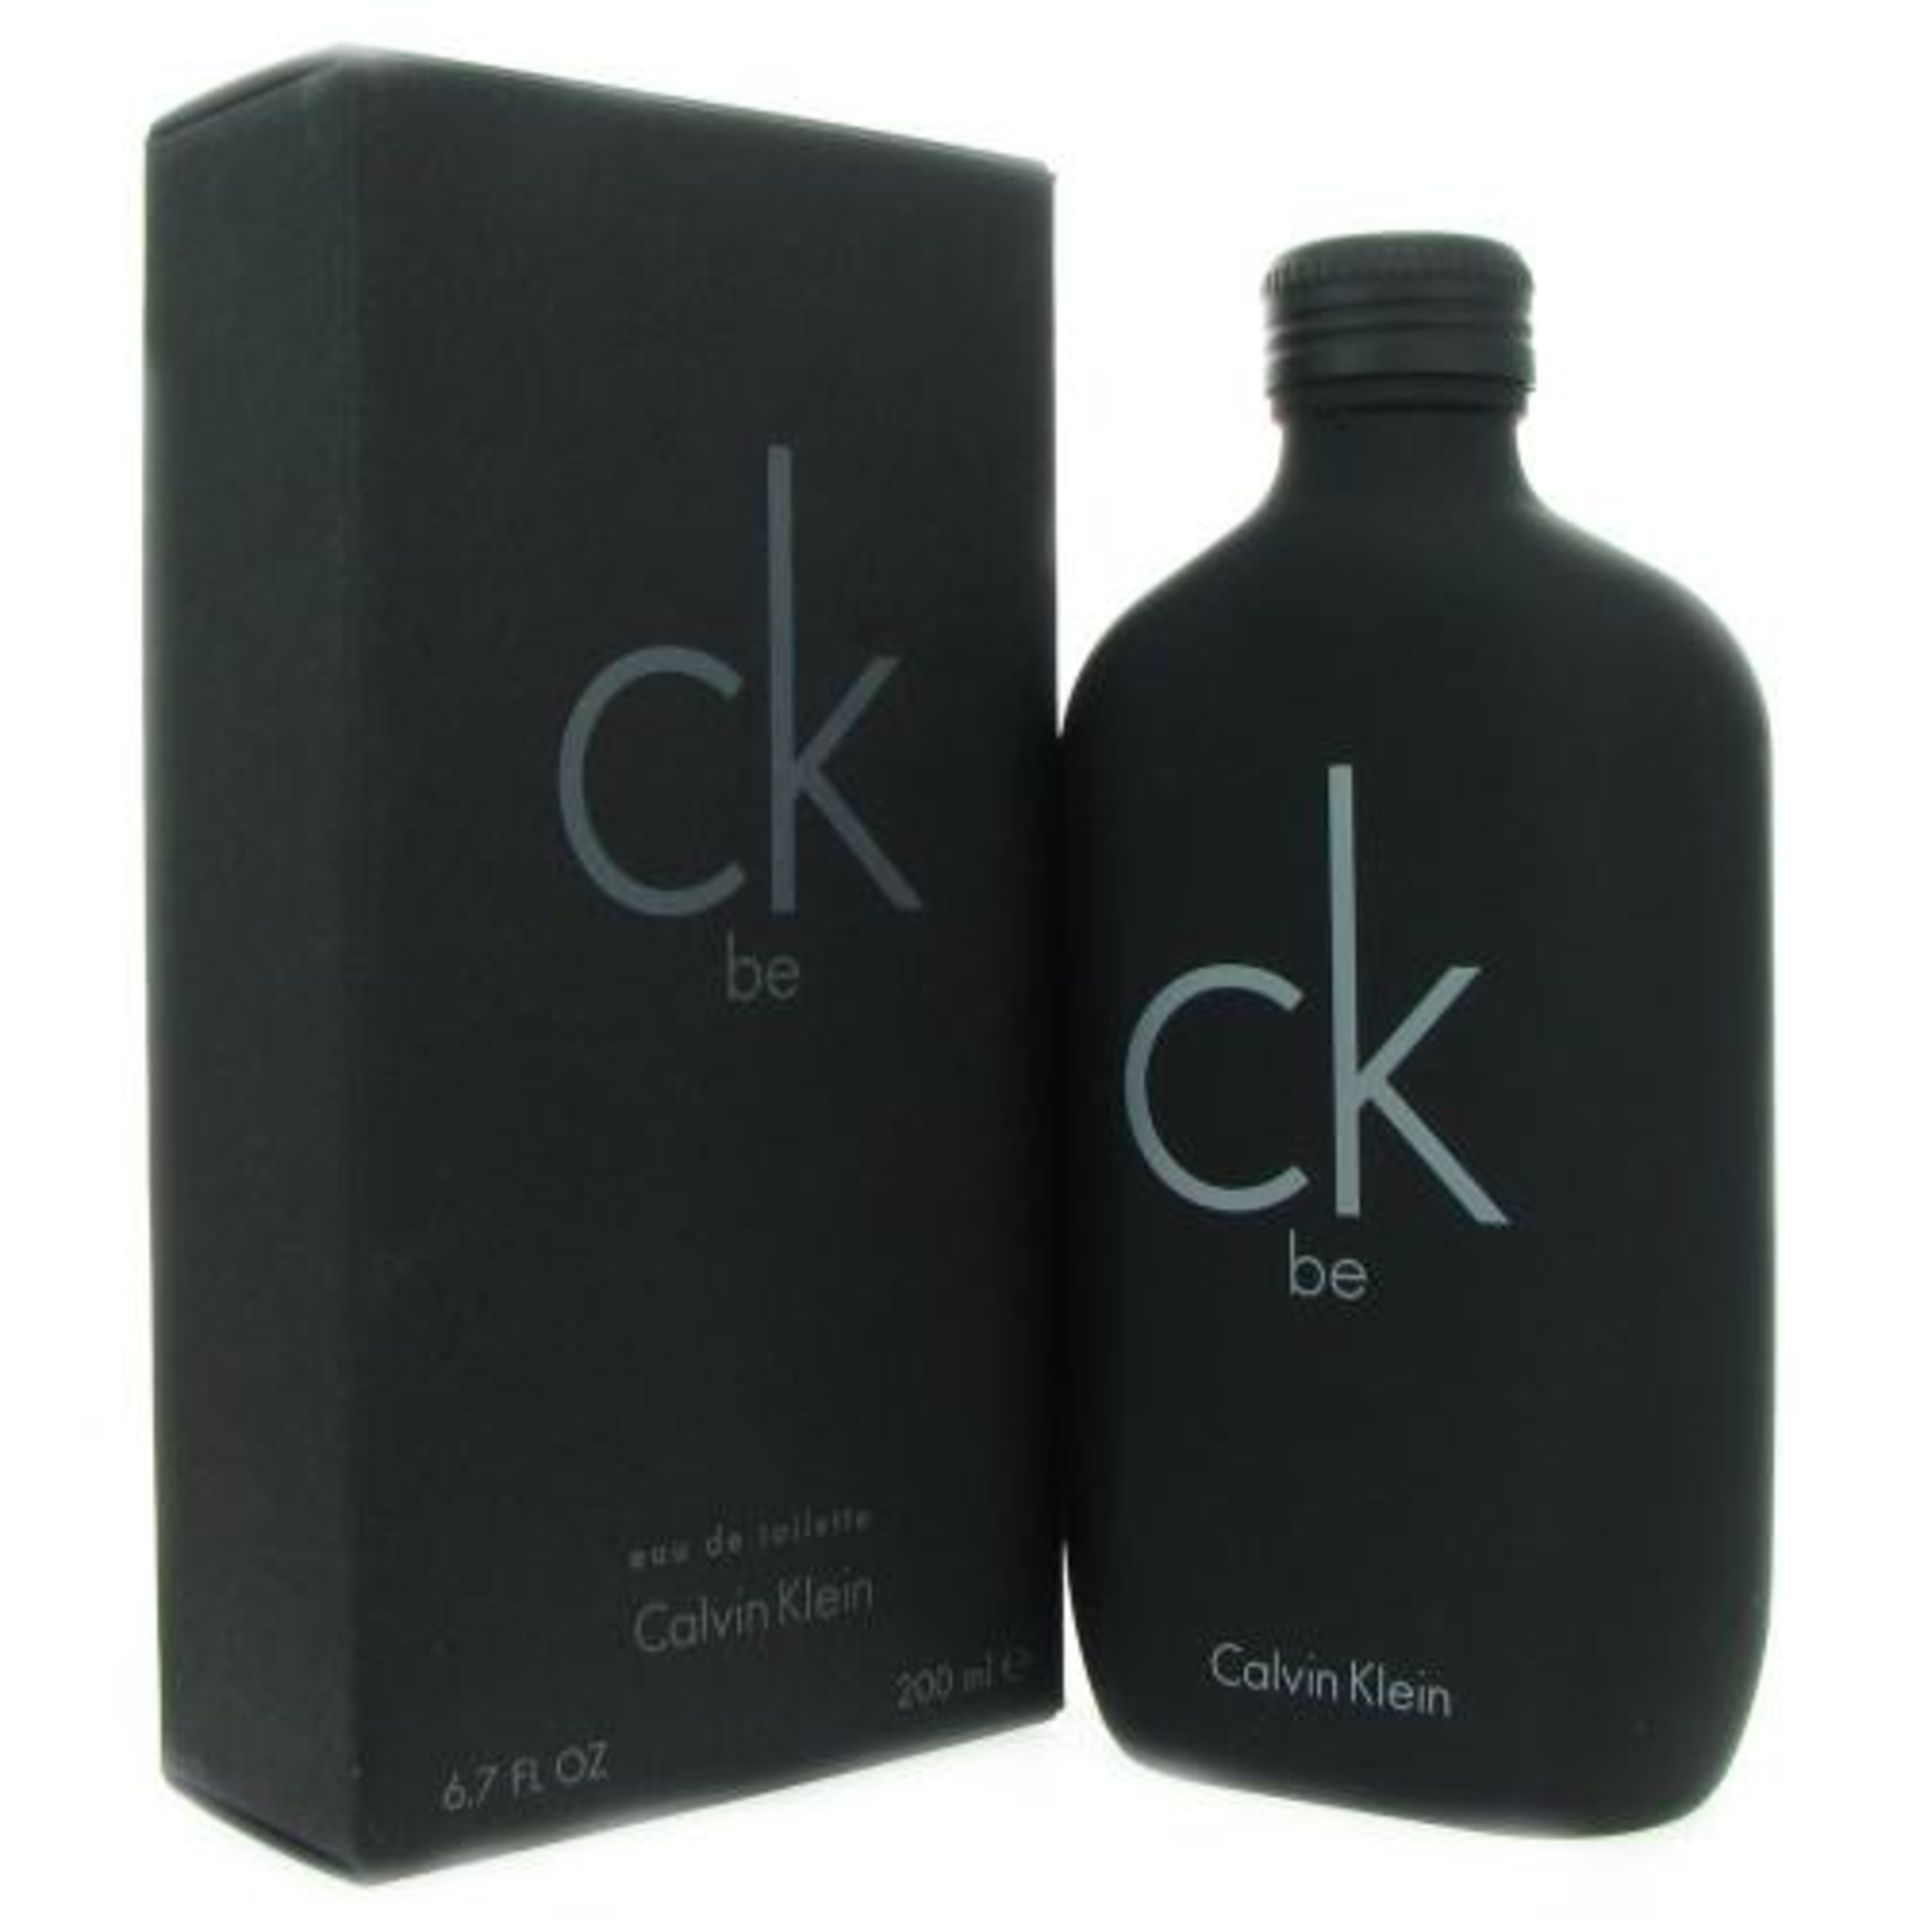 V Brand New CK be By Calvin Klein Eau De Toillette 200ml ISP £34.99 (theperfumeshop)